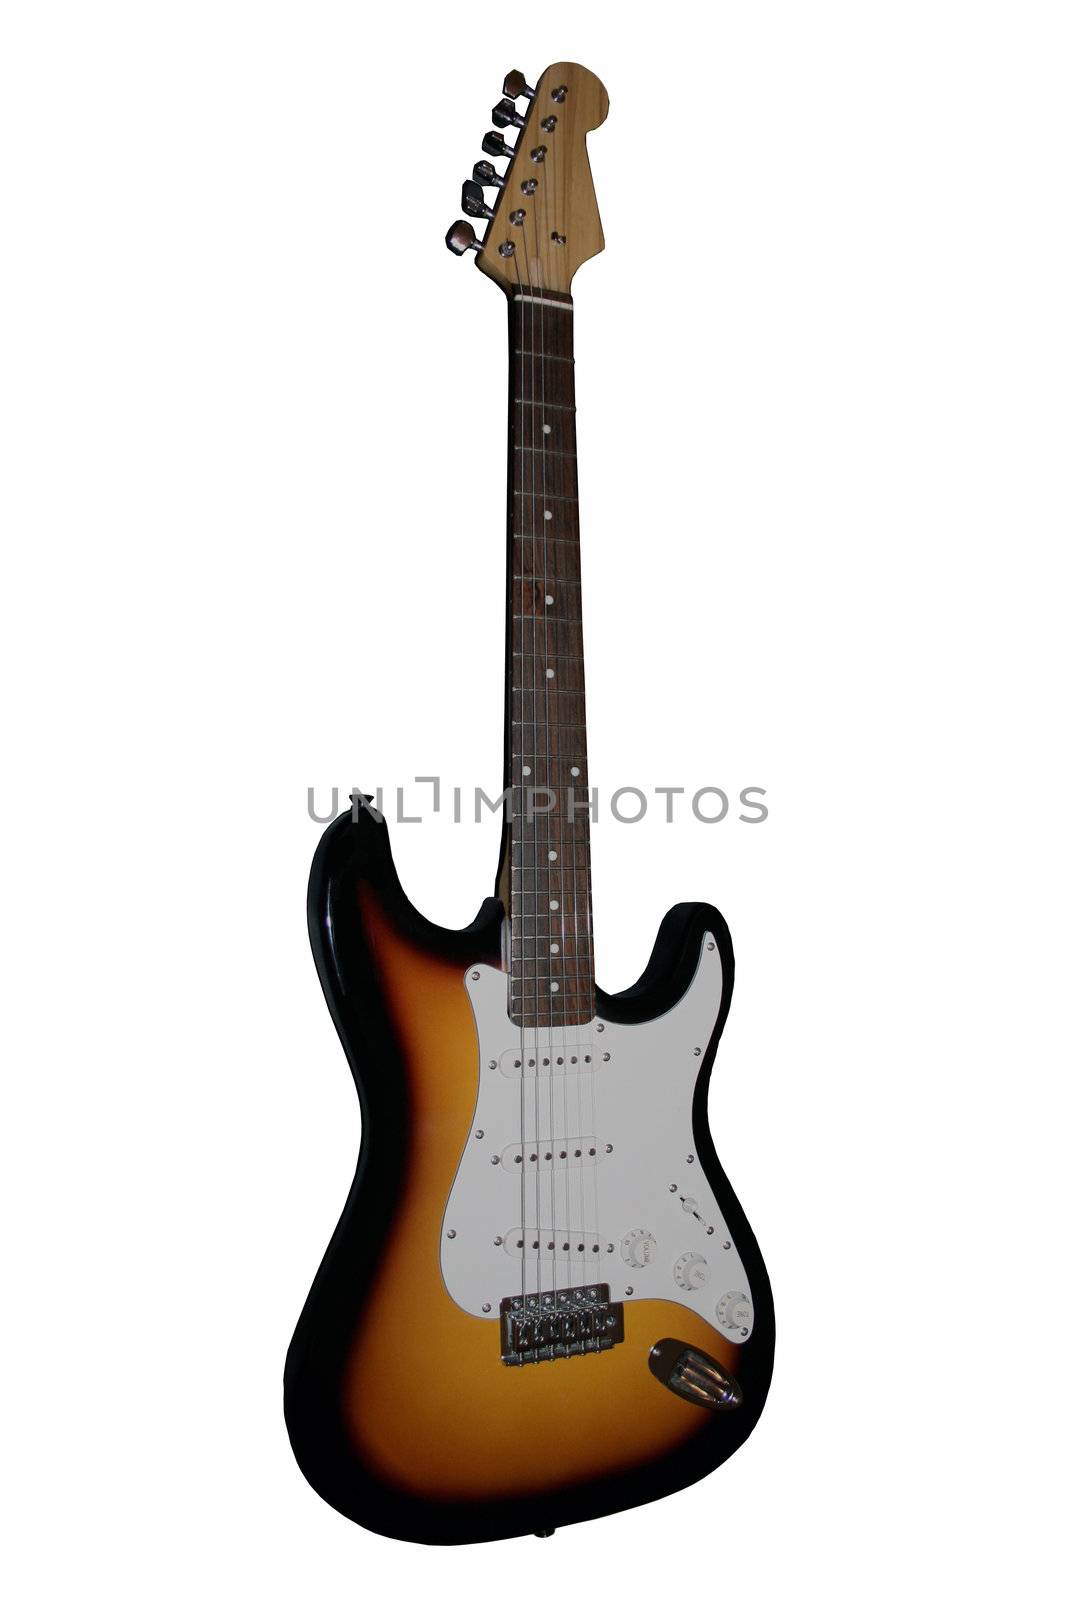 Guitar by Koufax73